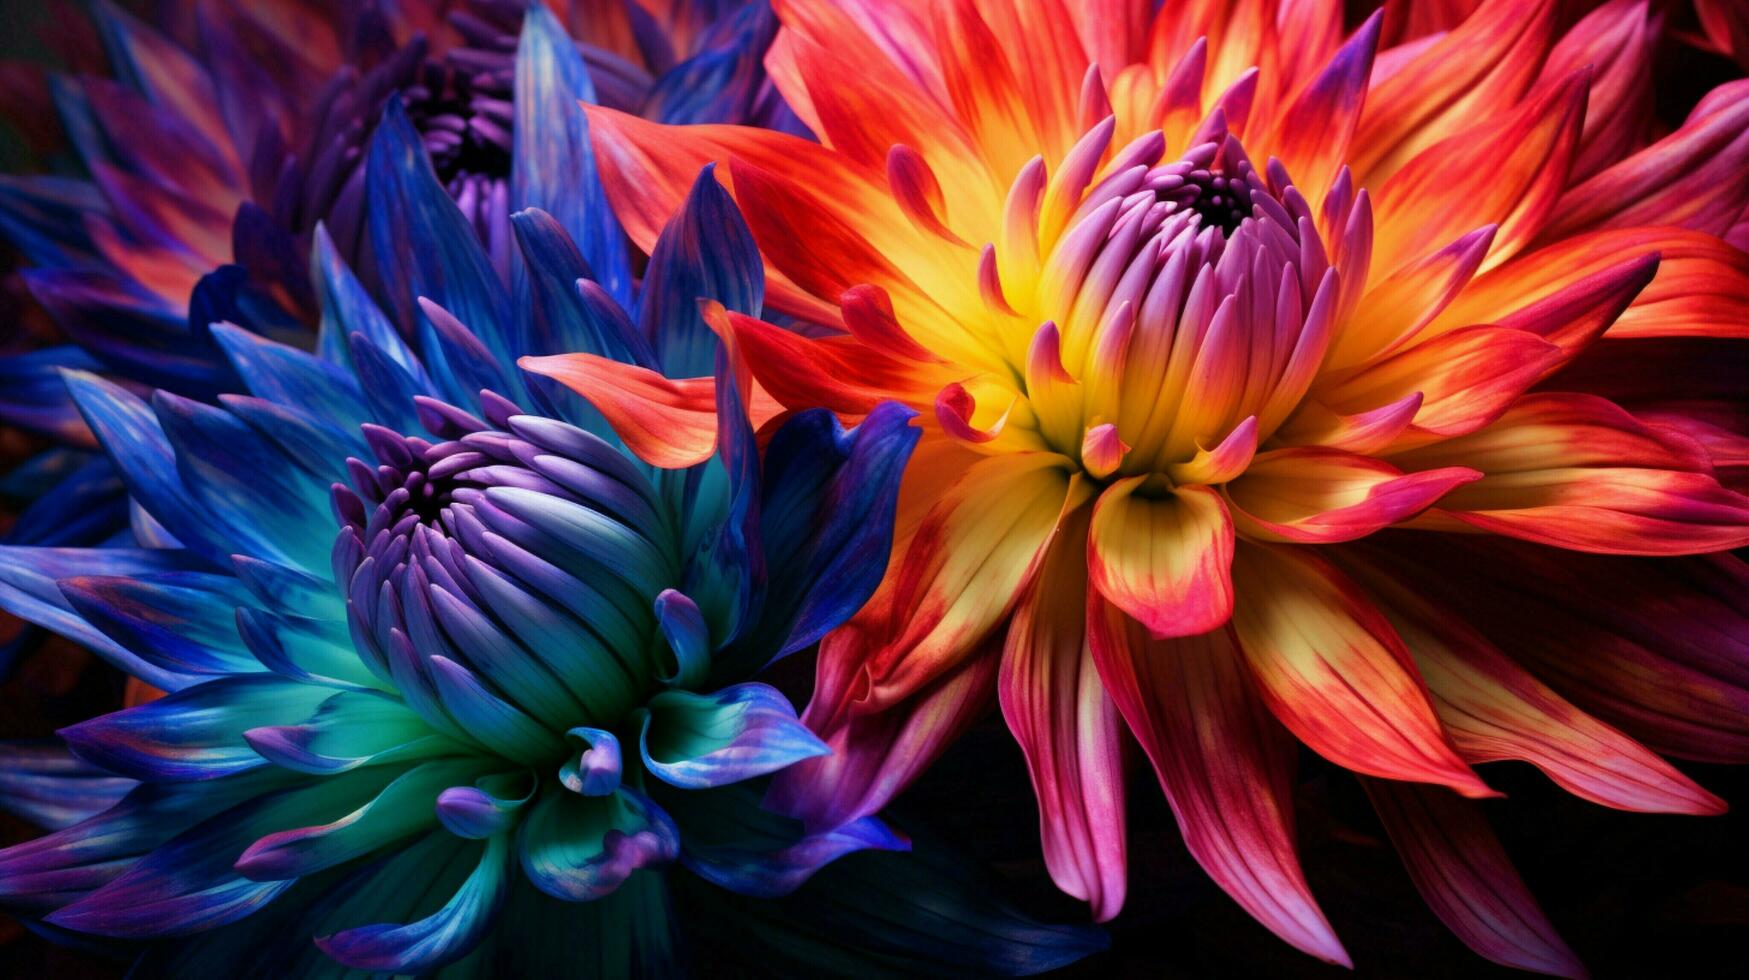 naturezas beleza capturado dentro colorida flor fechar acima foto